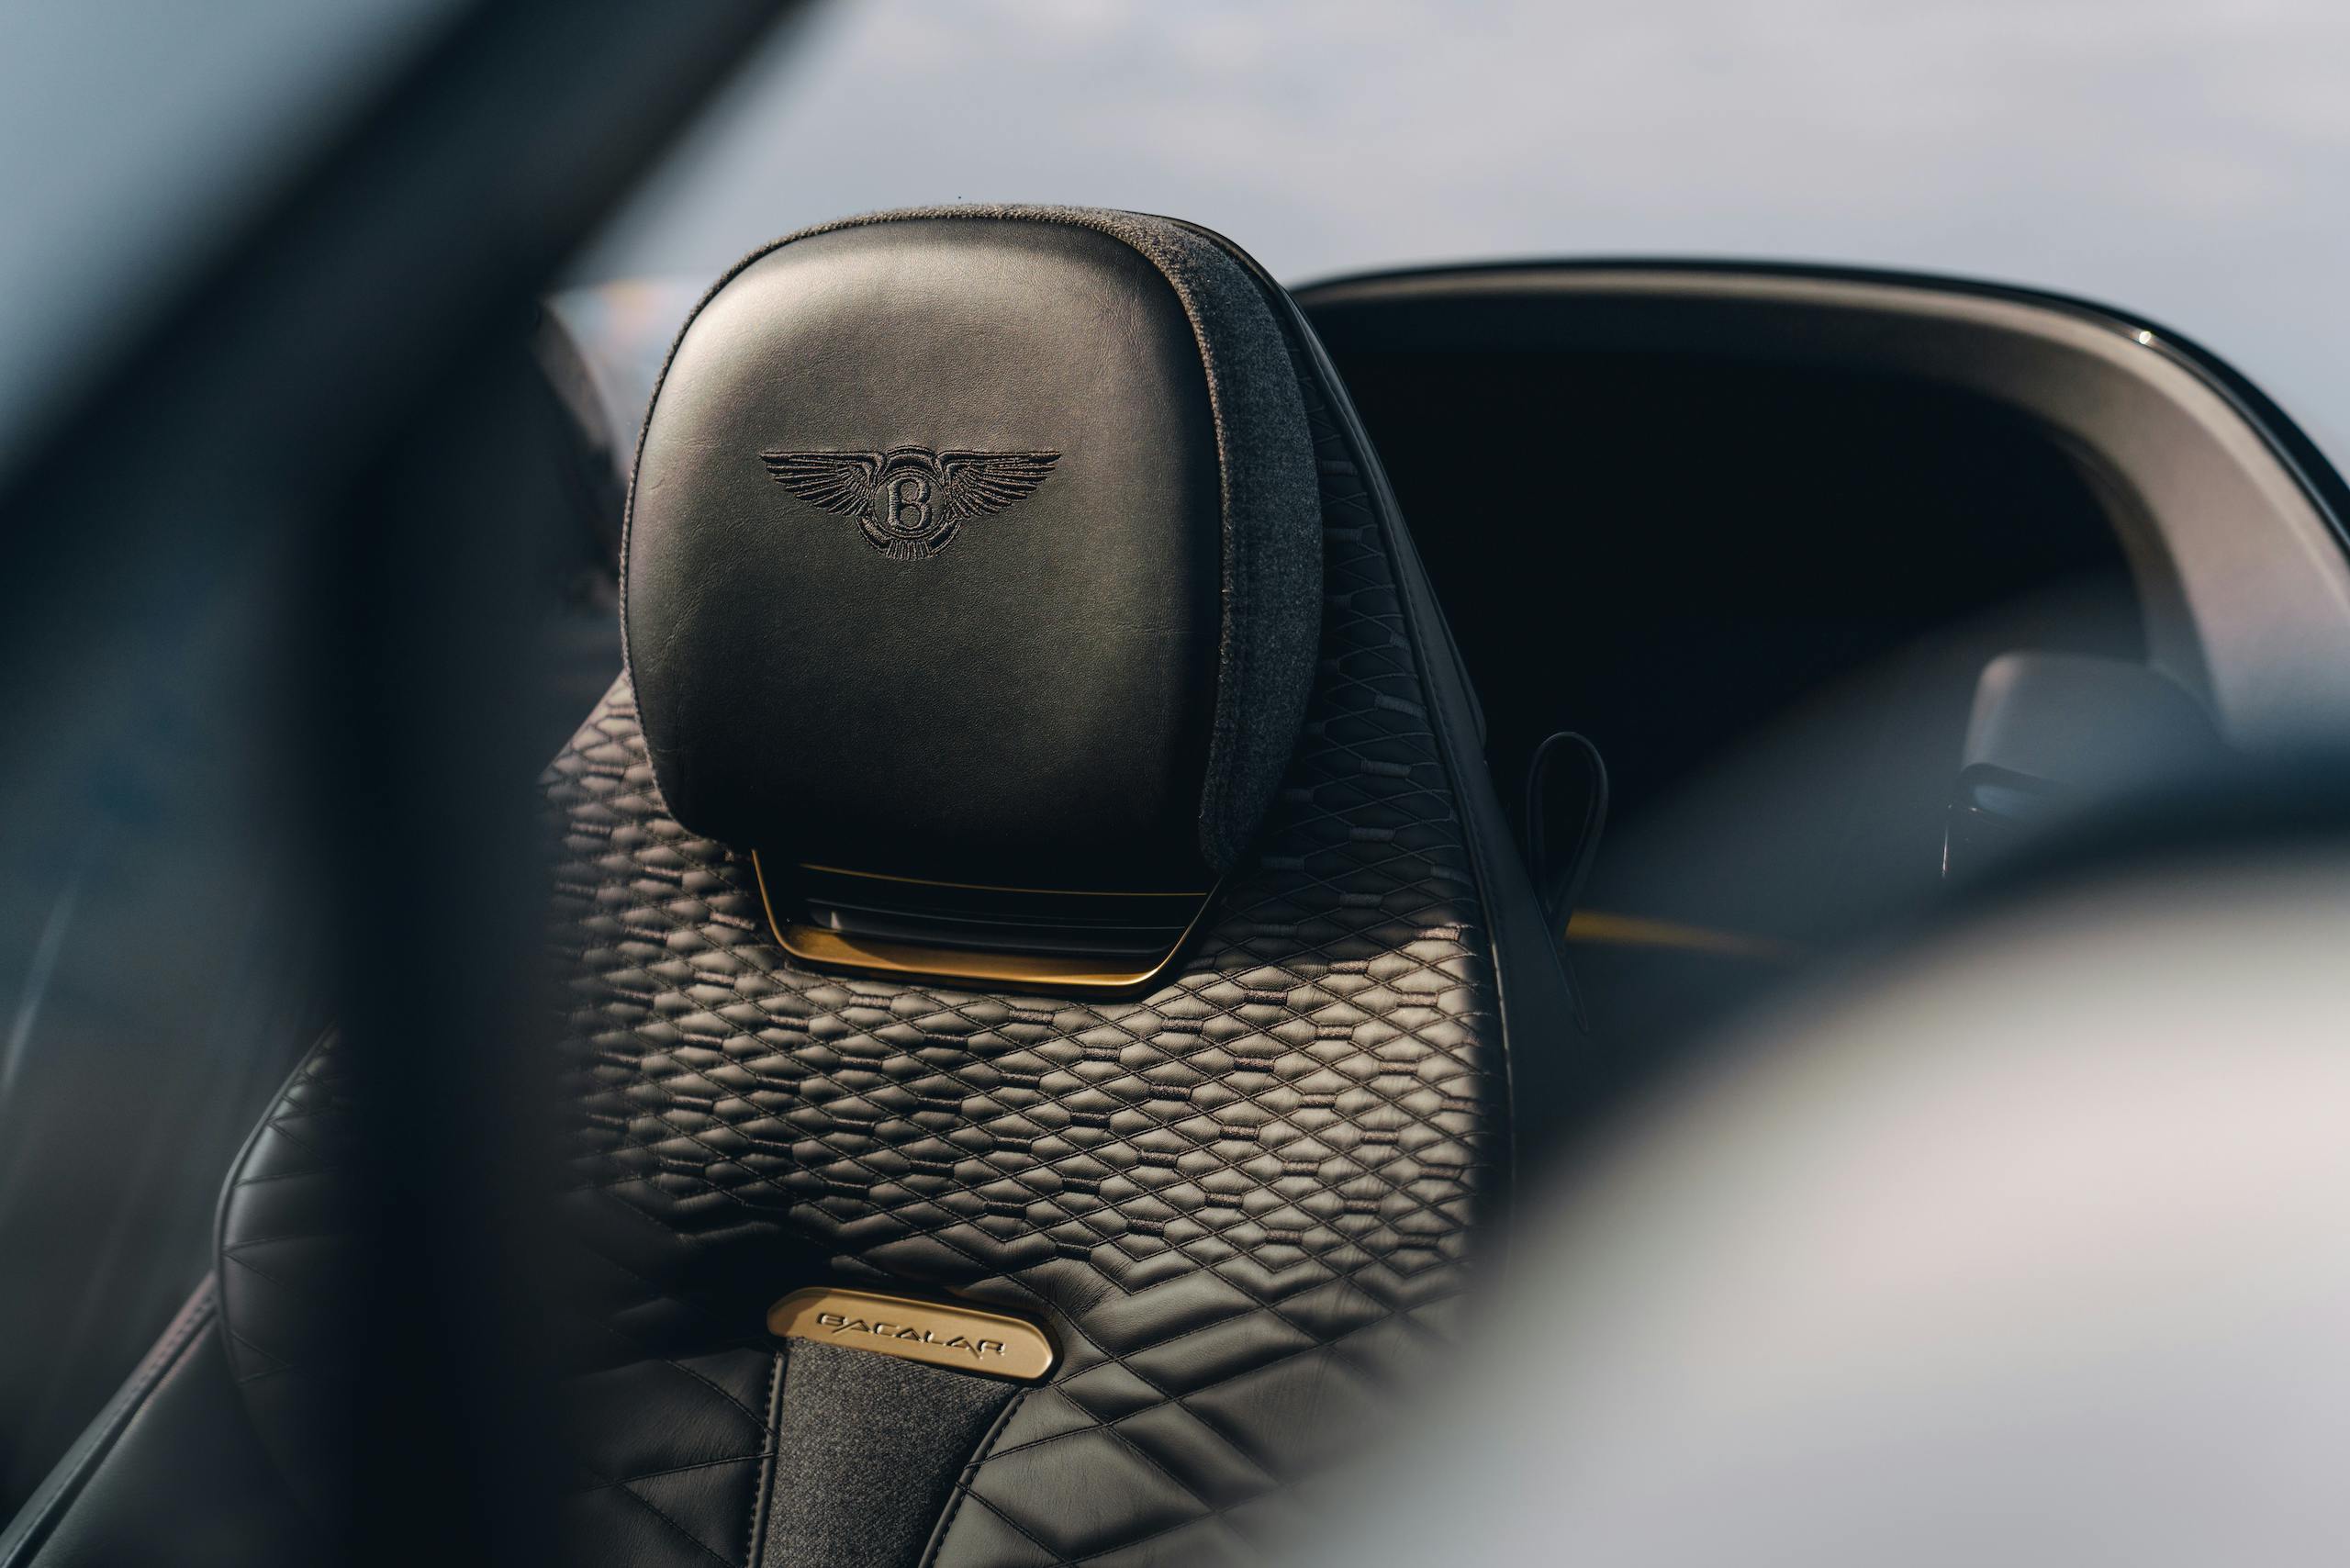 2021 Bentley Bacalar interior seat headrest embroidery detail